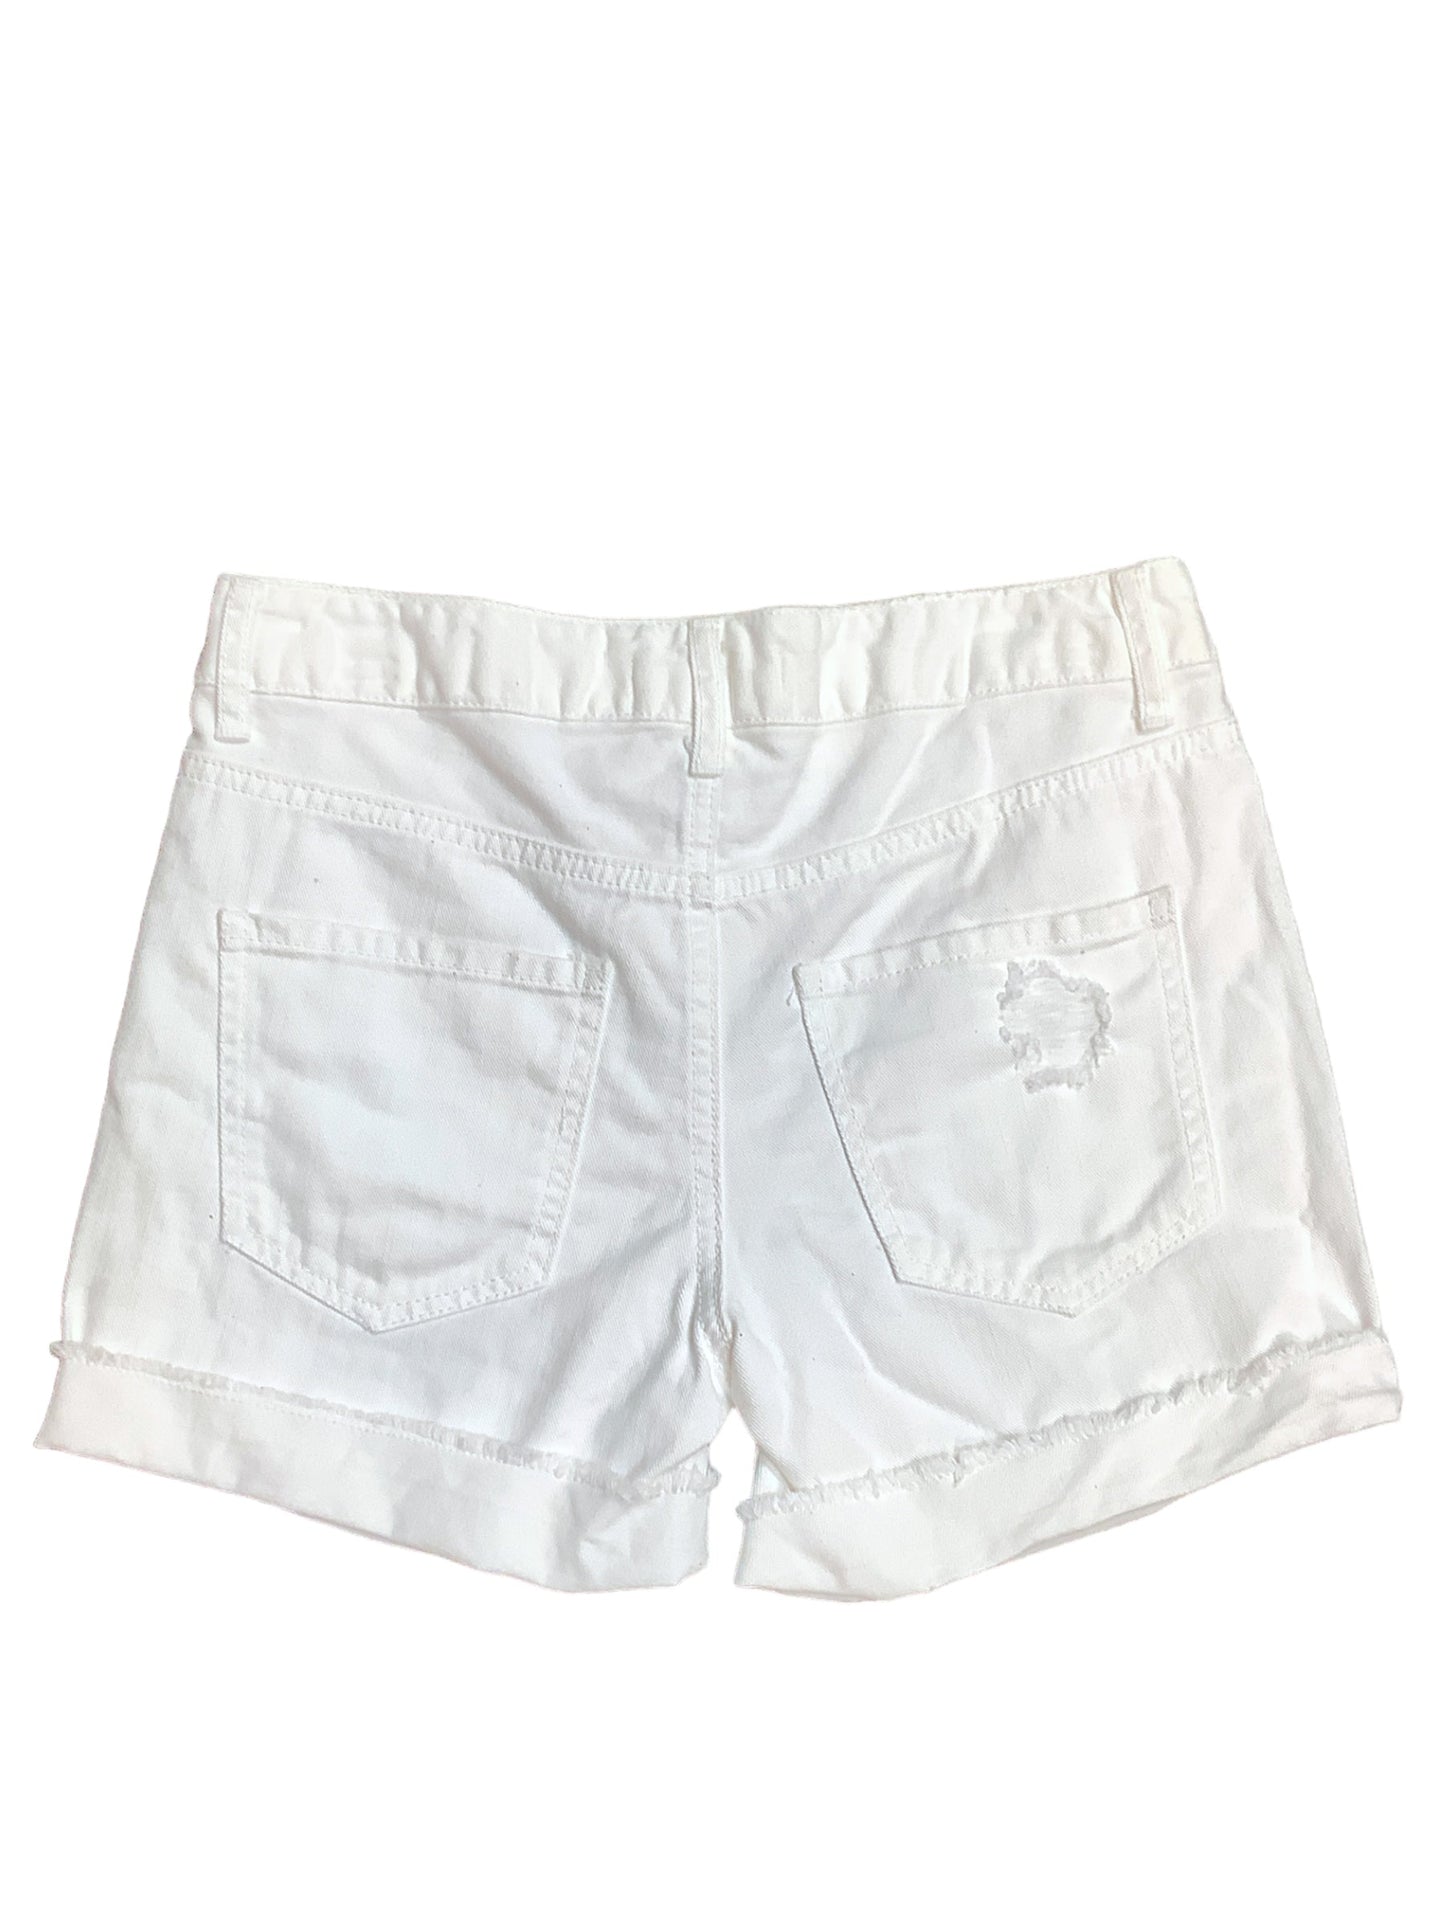 Shorts By Refuge  Size: Xs